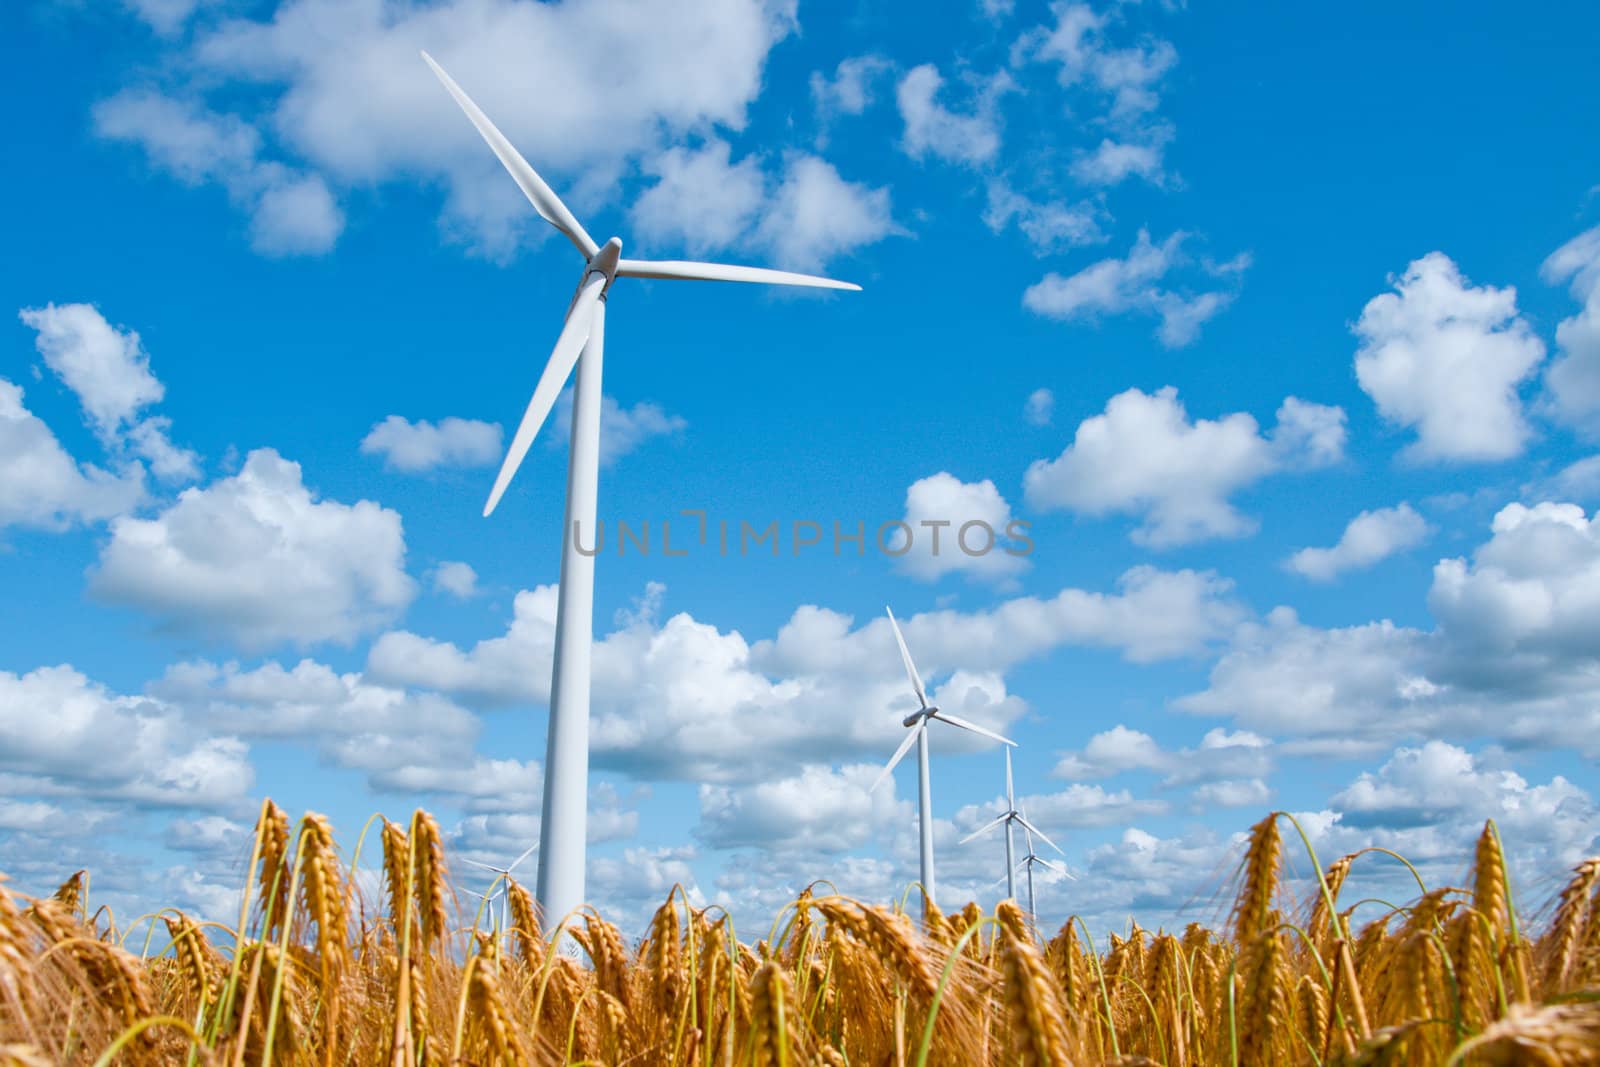 wind turbines in rural area in a wheat field in front of a beautiful blue sky